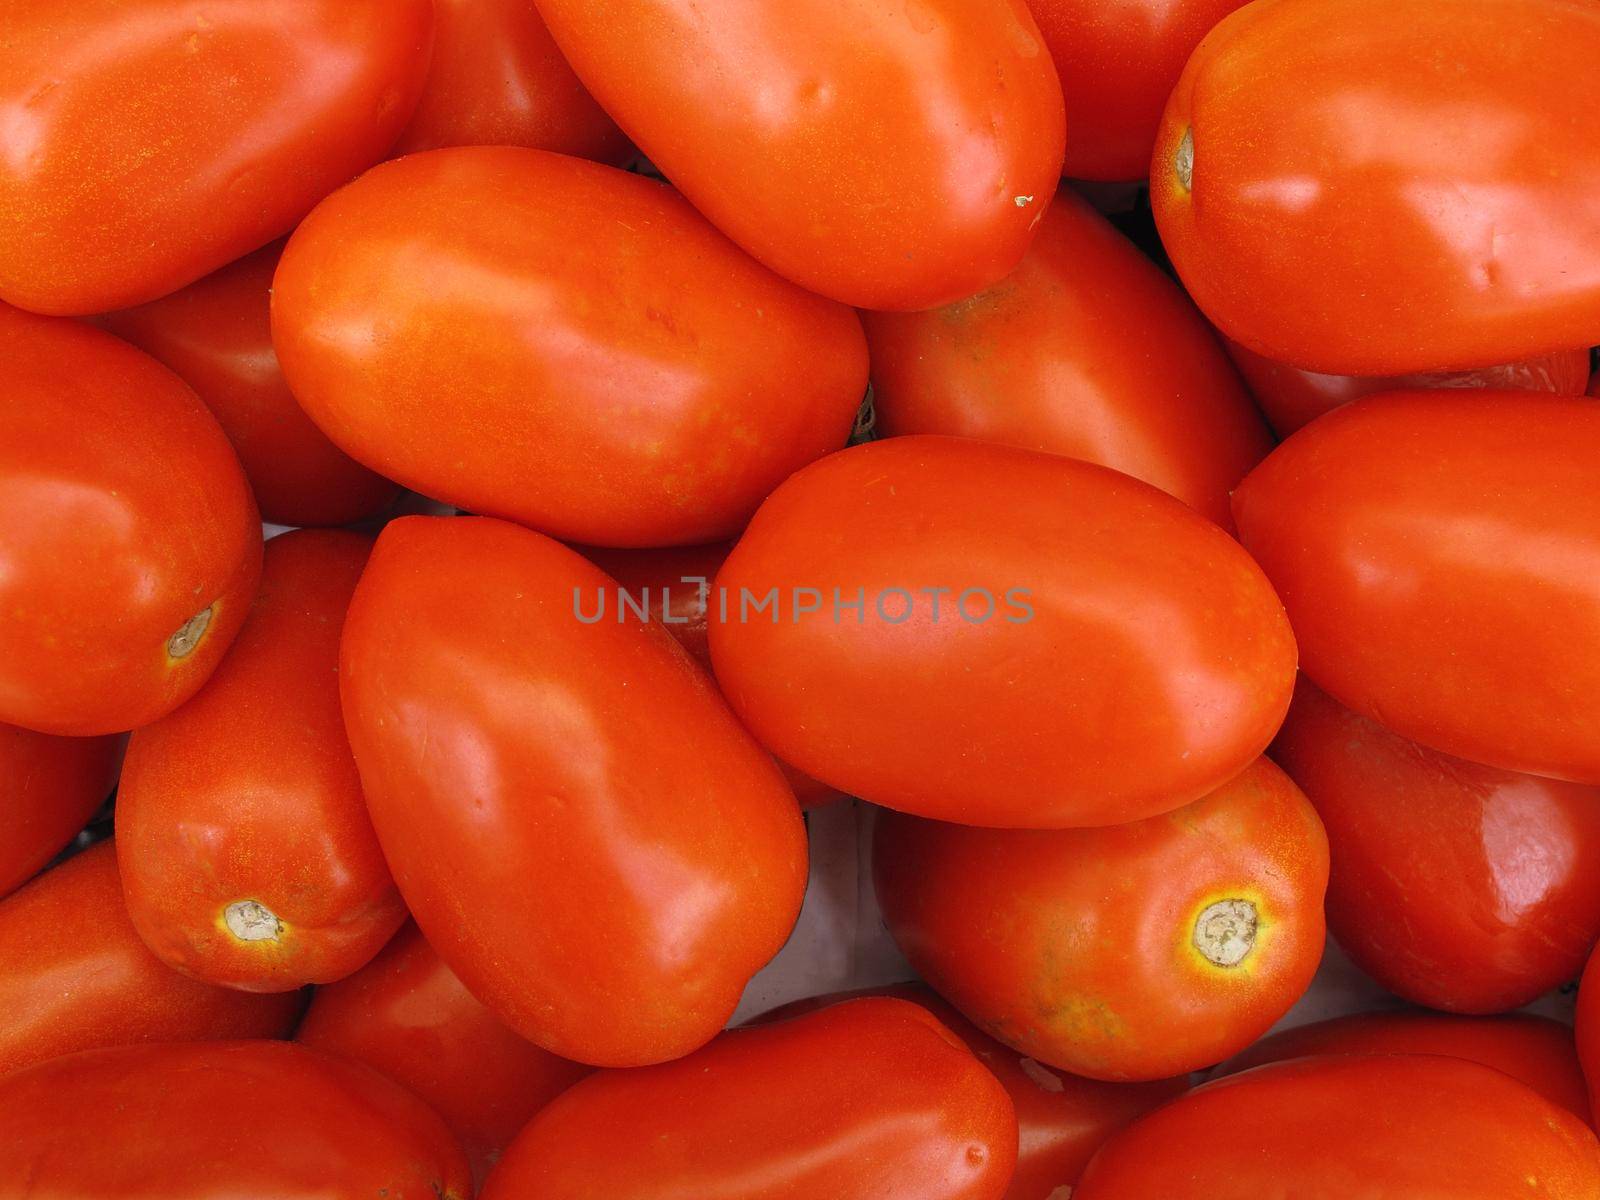 fresh organic Red tomatoes background